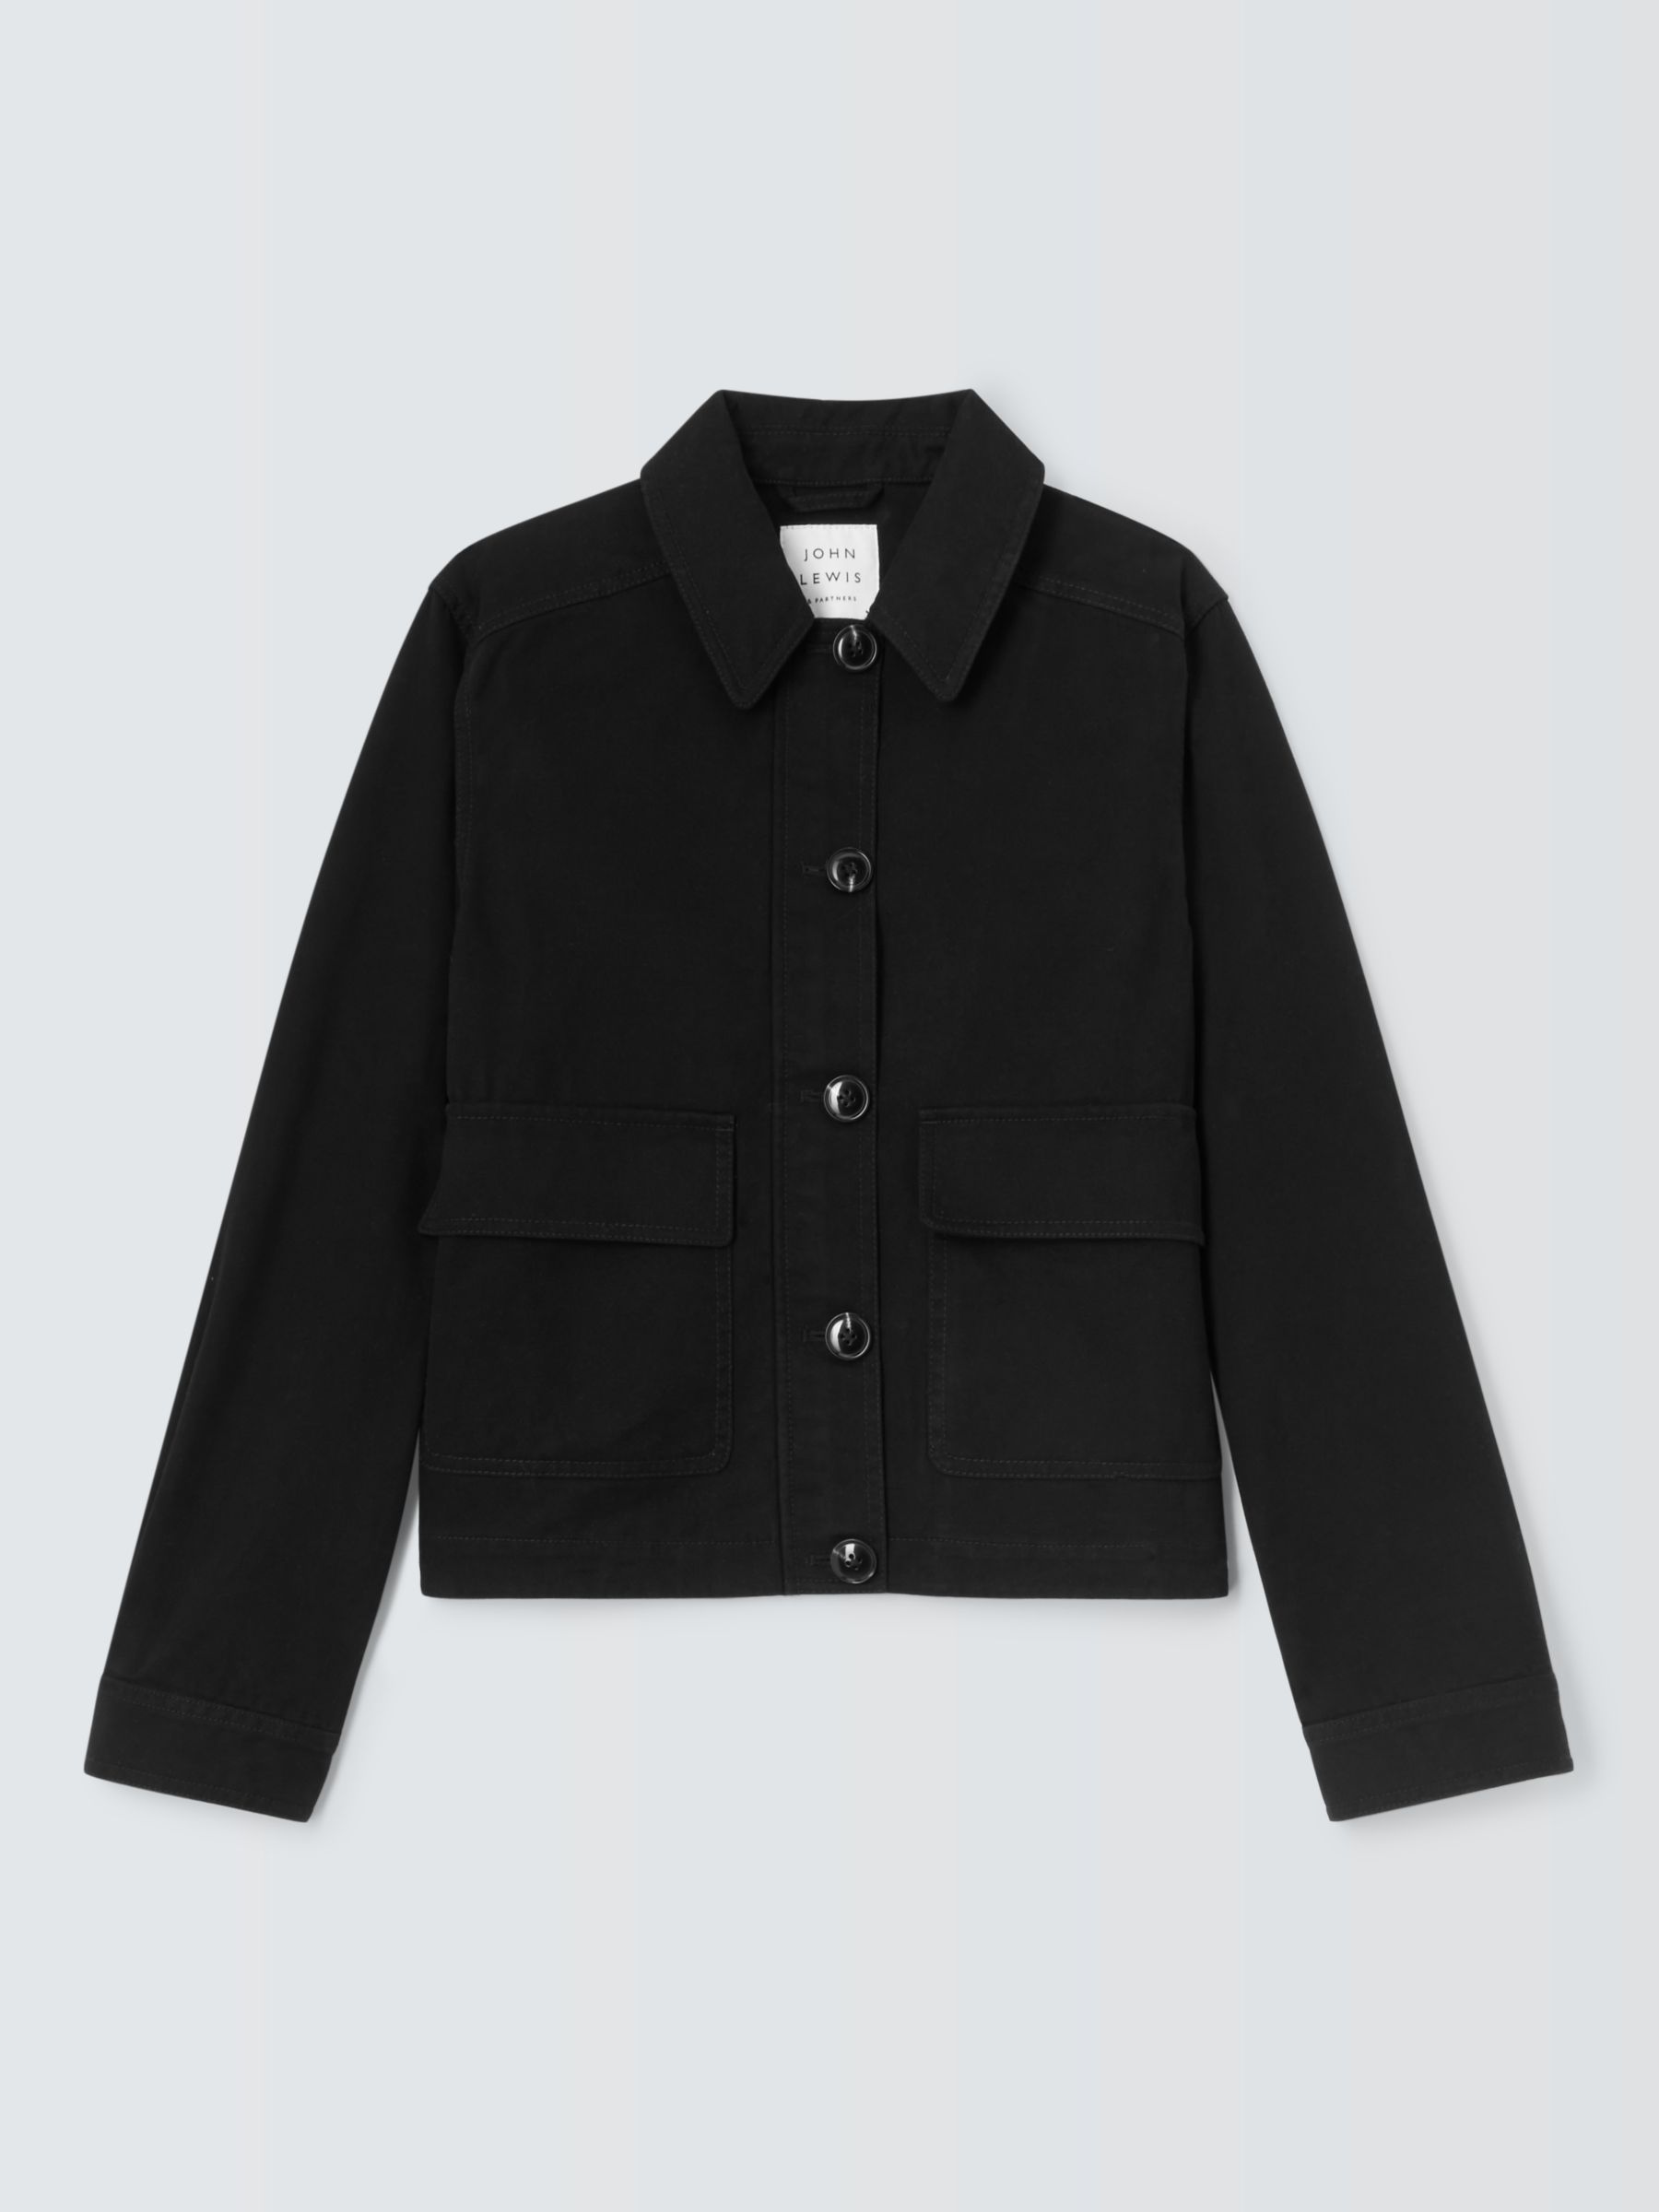 John Lewis Cotton Twill Jacket, Black, 8